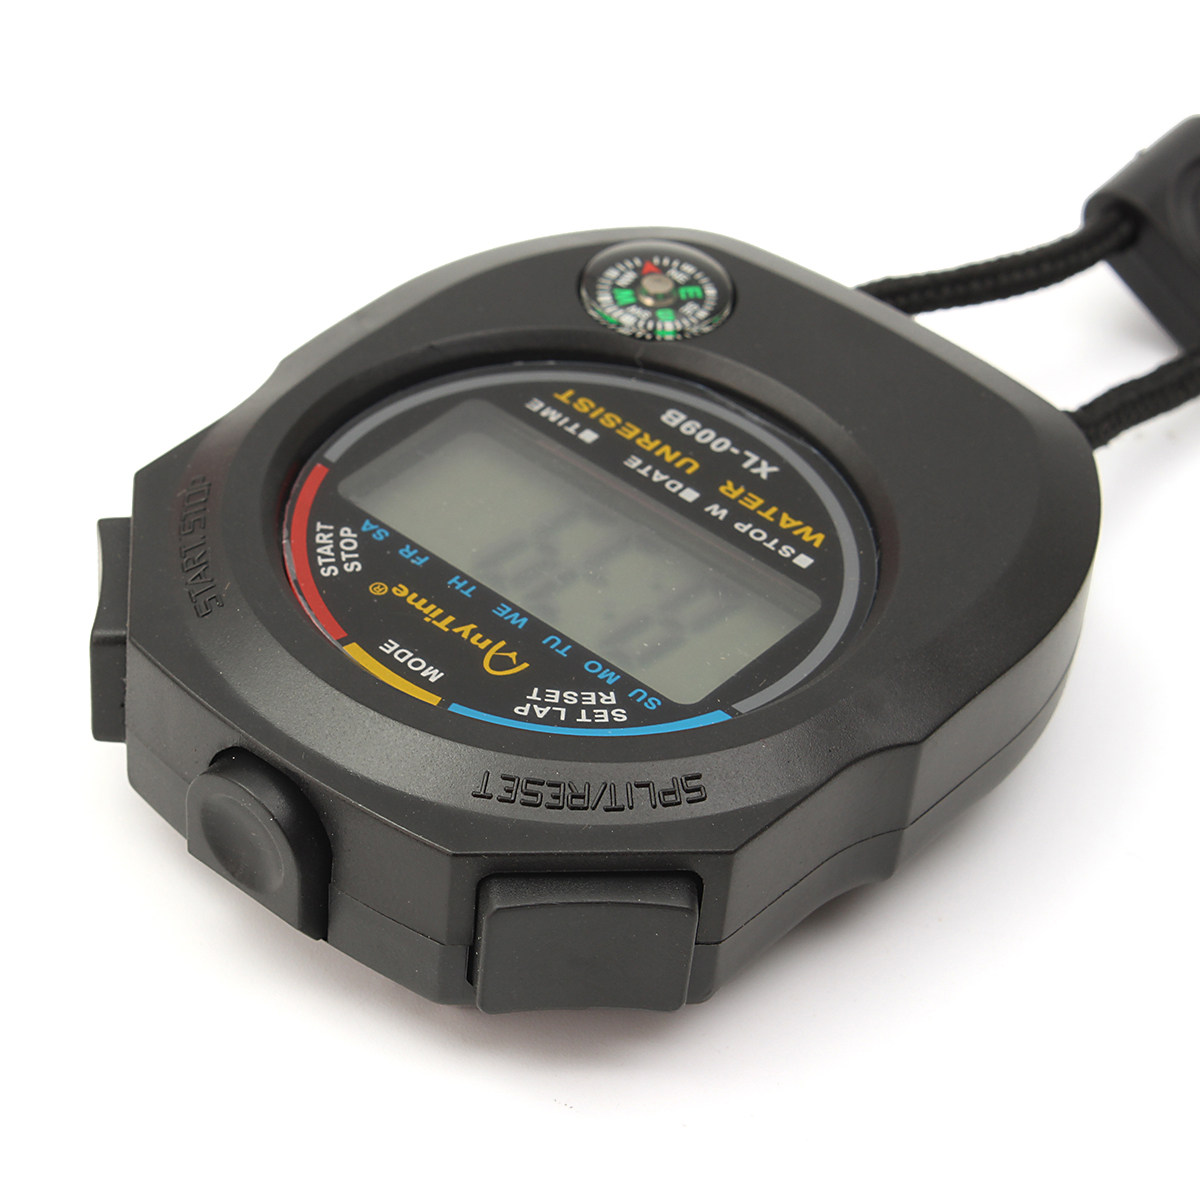 Waterproof-Handheld-LCD-Sports-Stopwatch-Digital-Chronograph-Digital-Counter-Timer-1123679